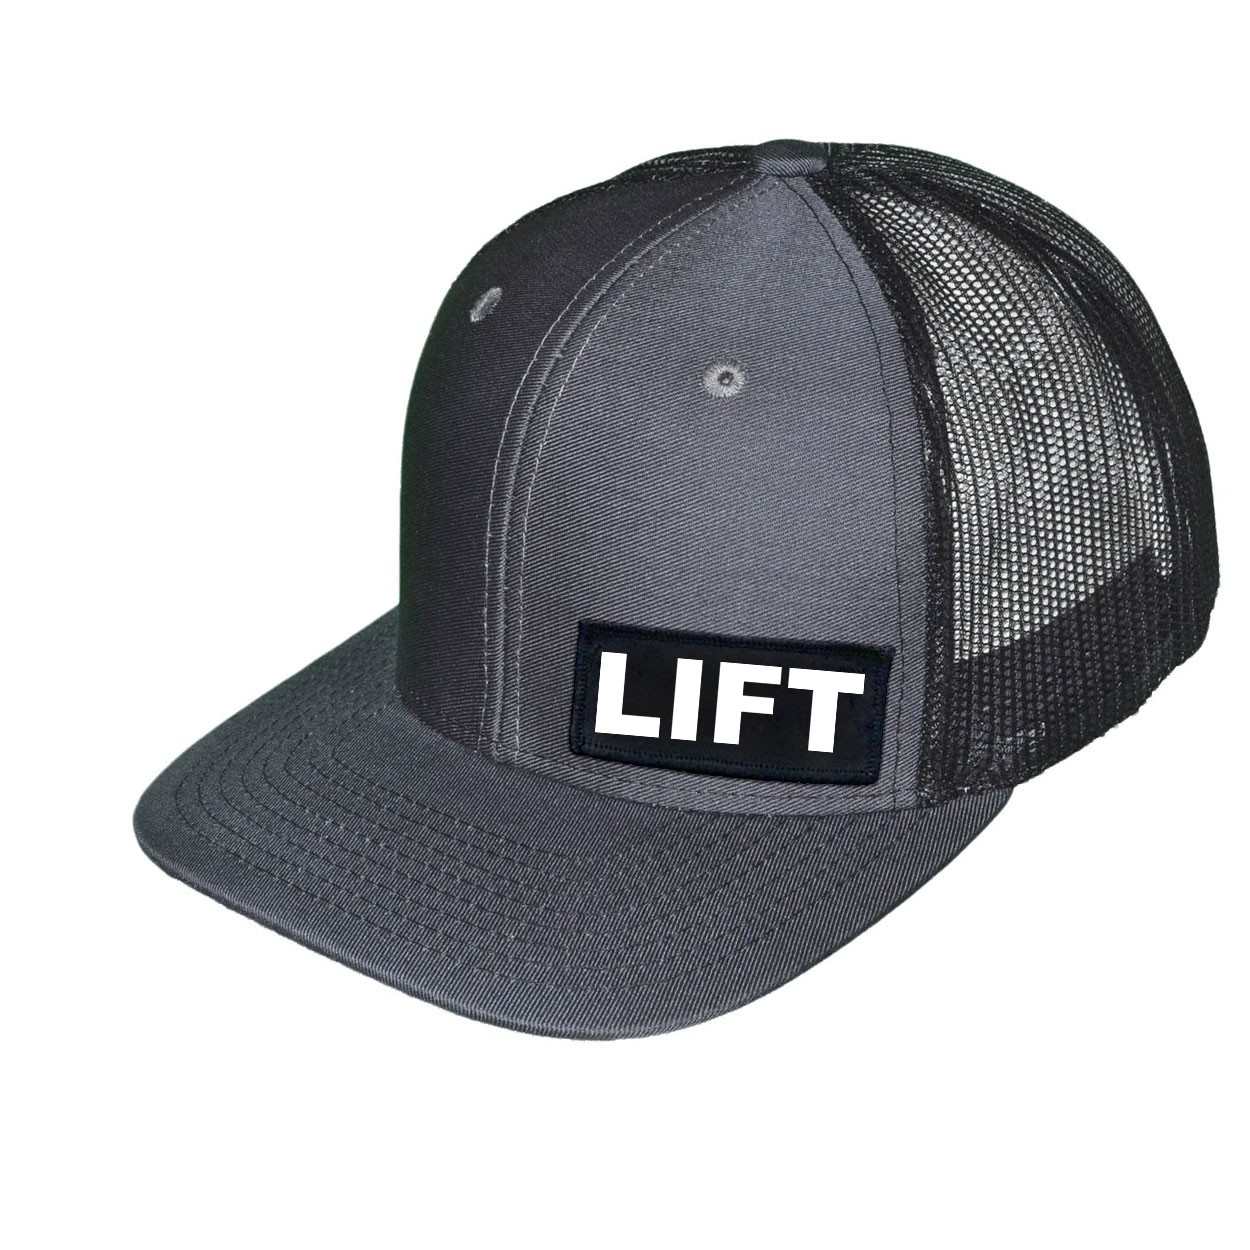 Lift Brand Logo Night Out Woven Patch Snapback Trucker Hat Dark Gray/Black (White Logo)